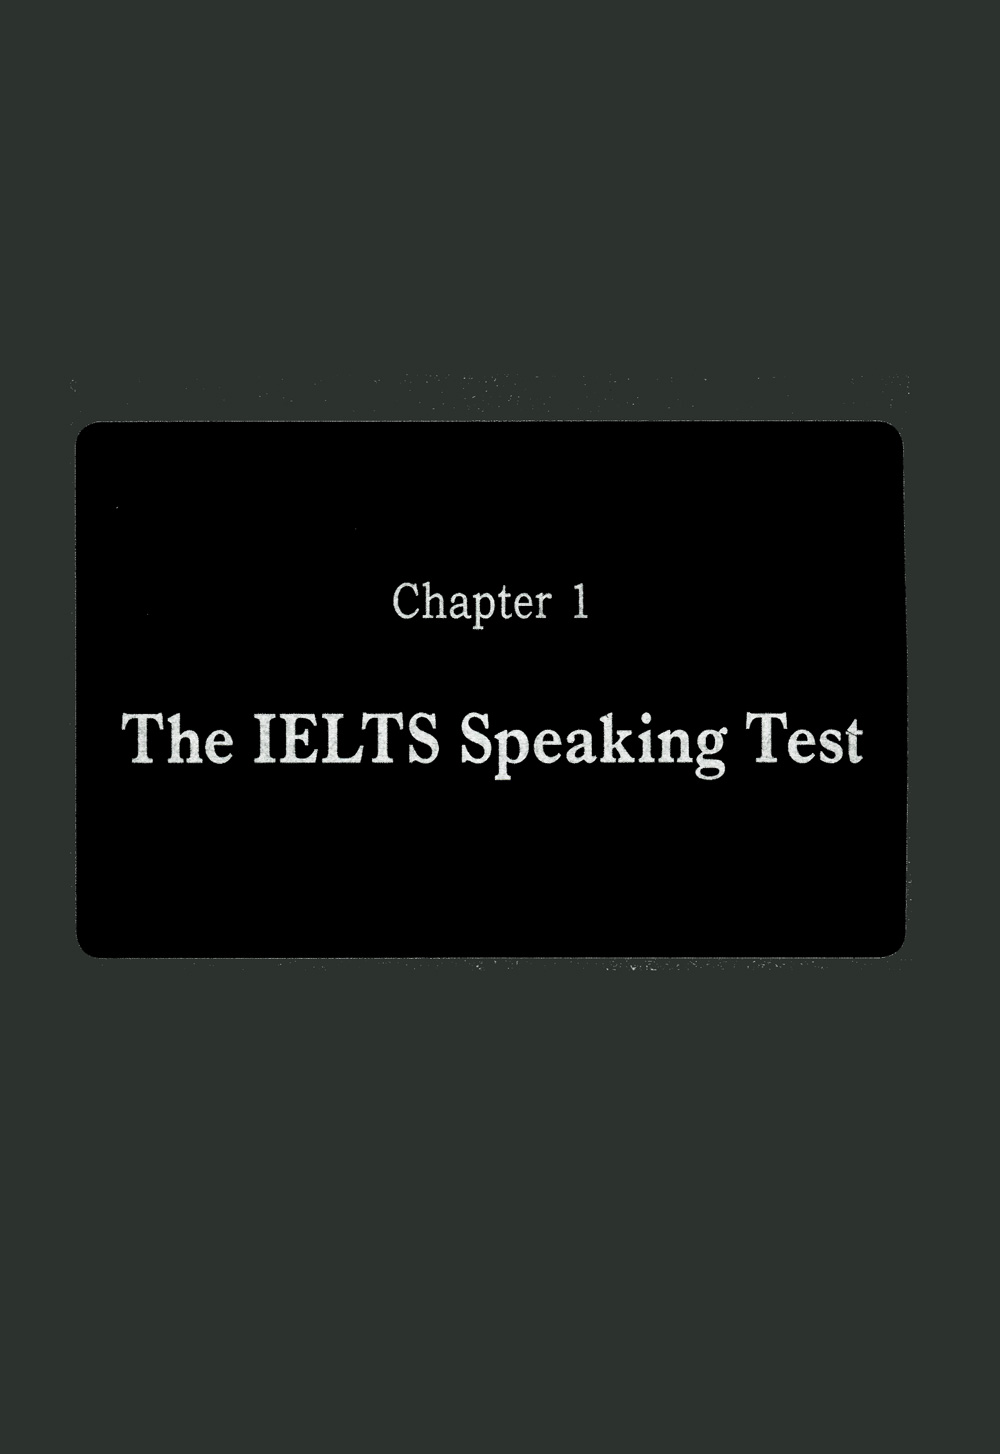 Basic Ielts Speaking PDF